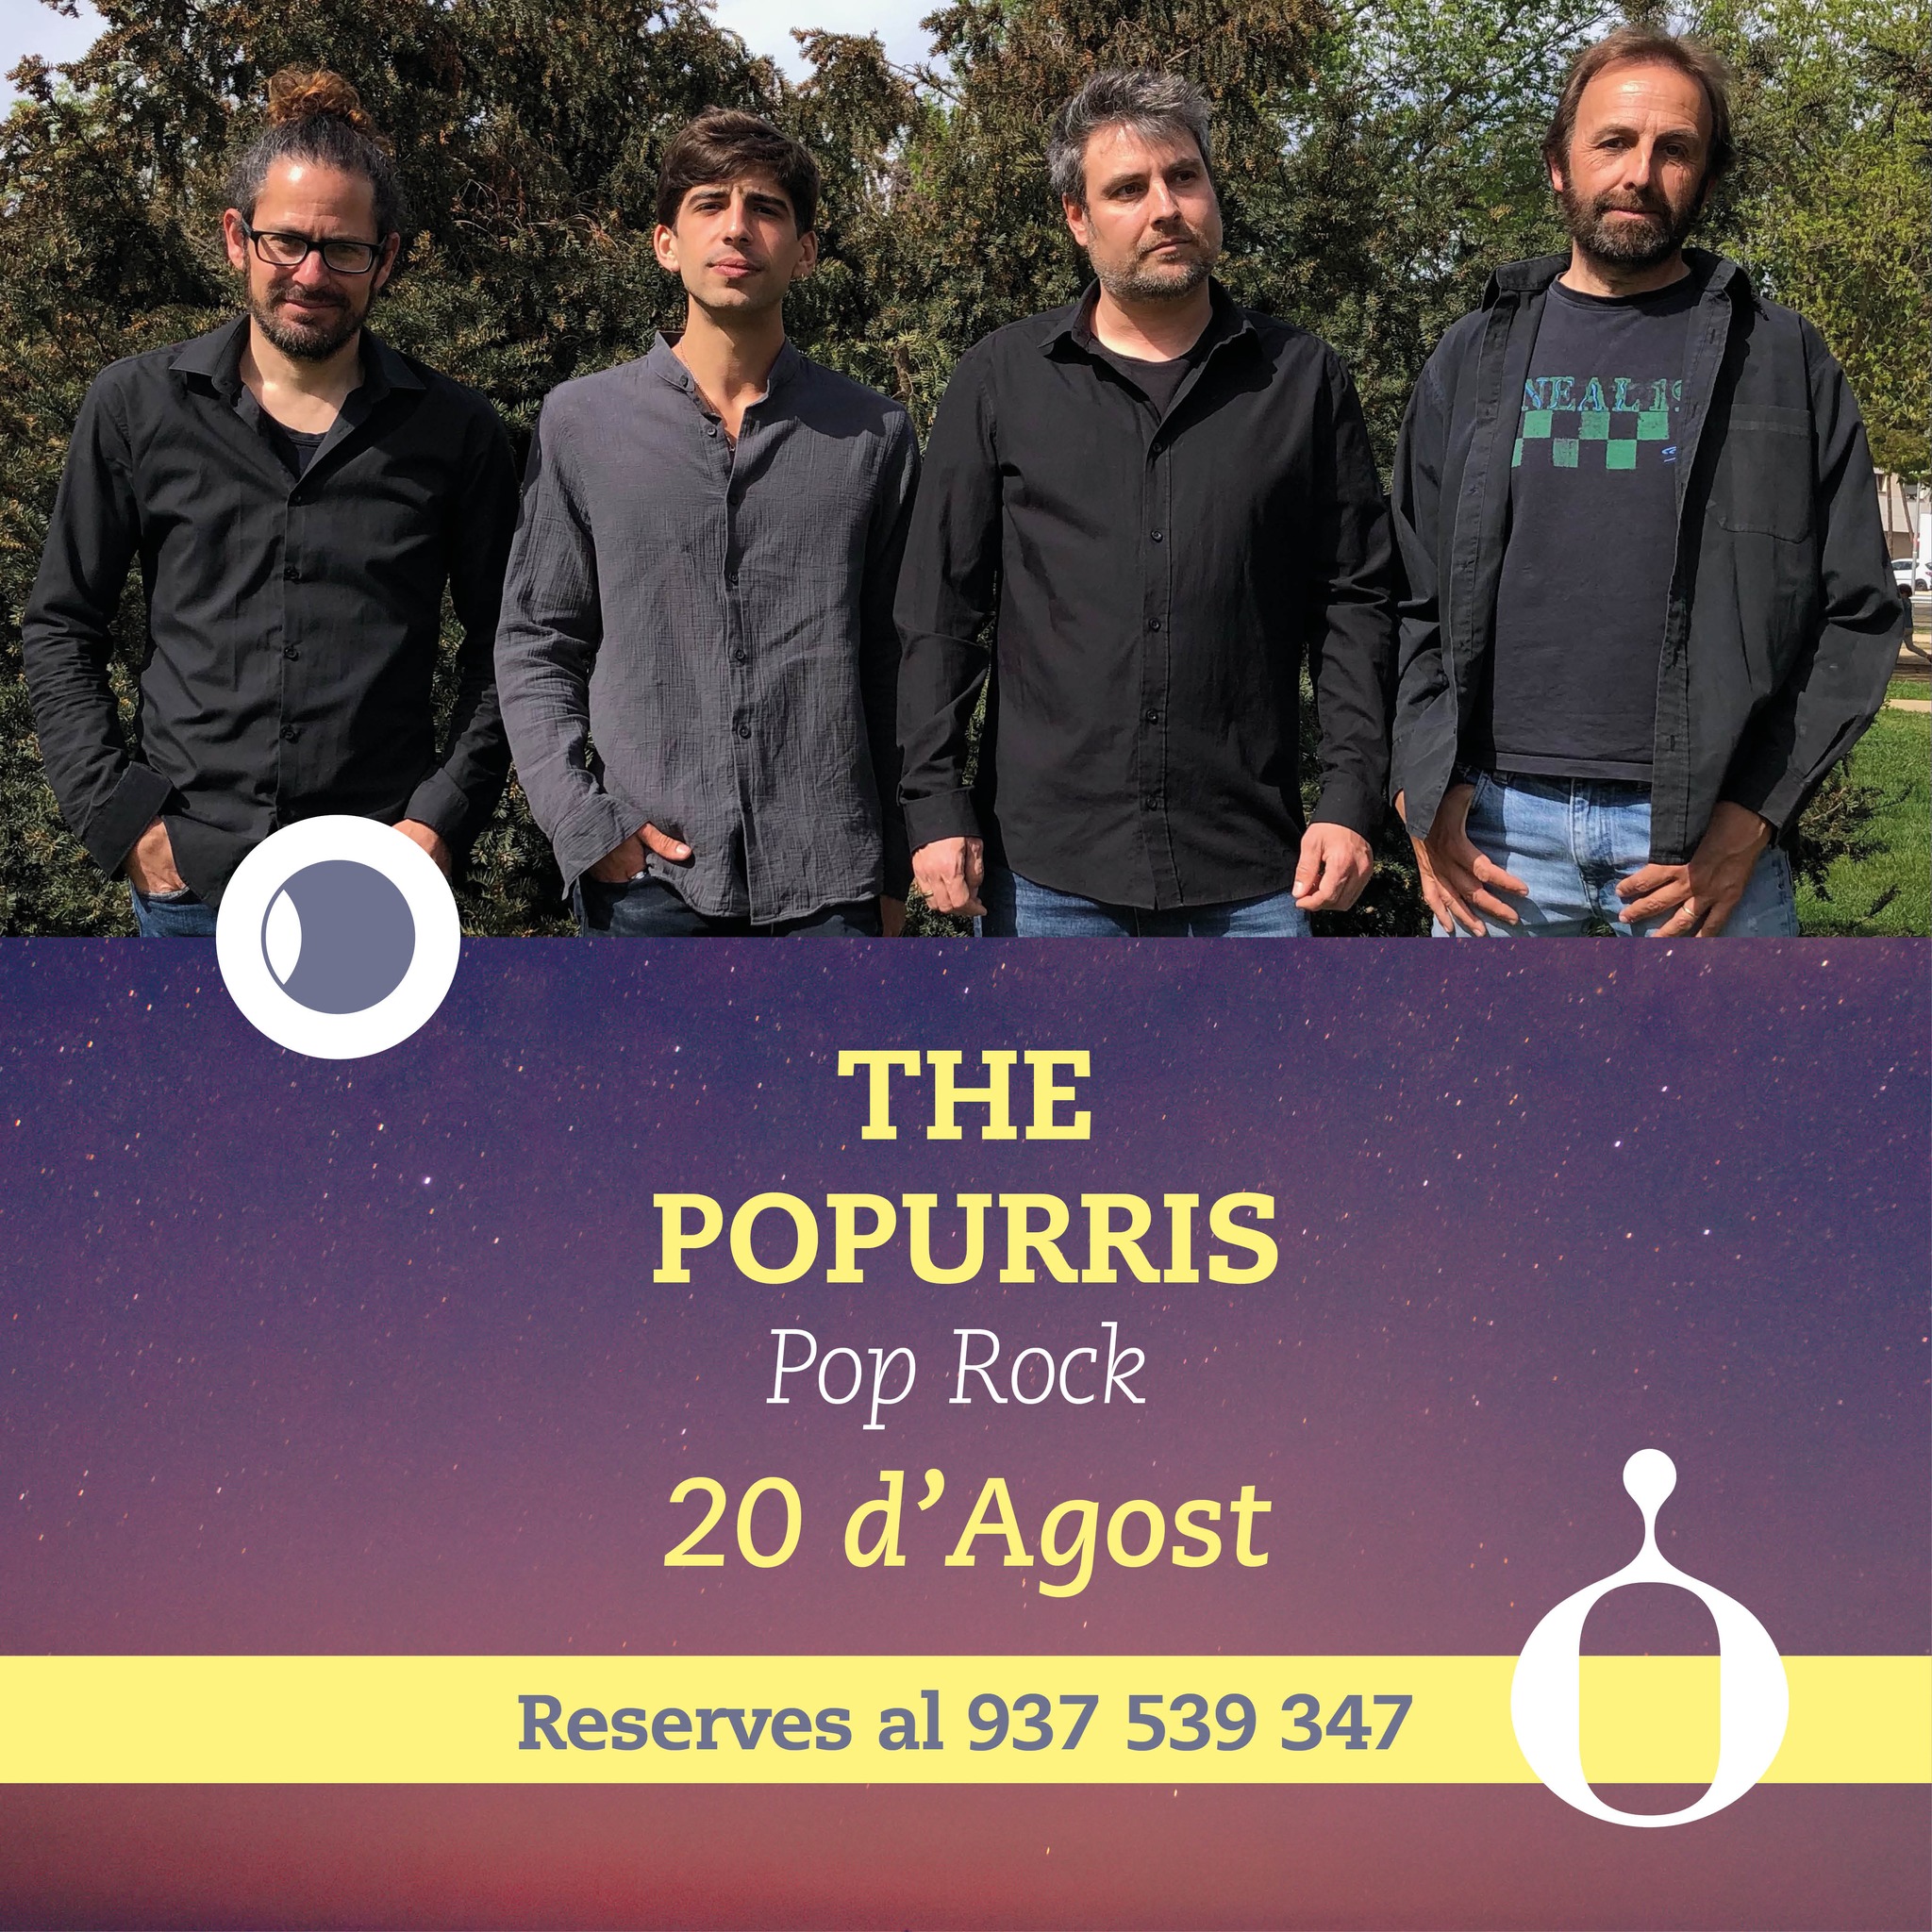 The Popurris